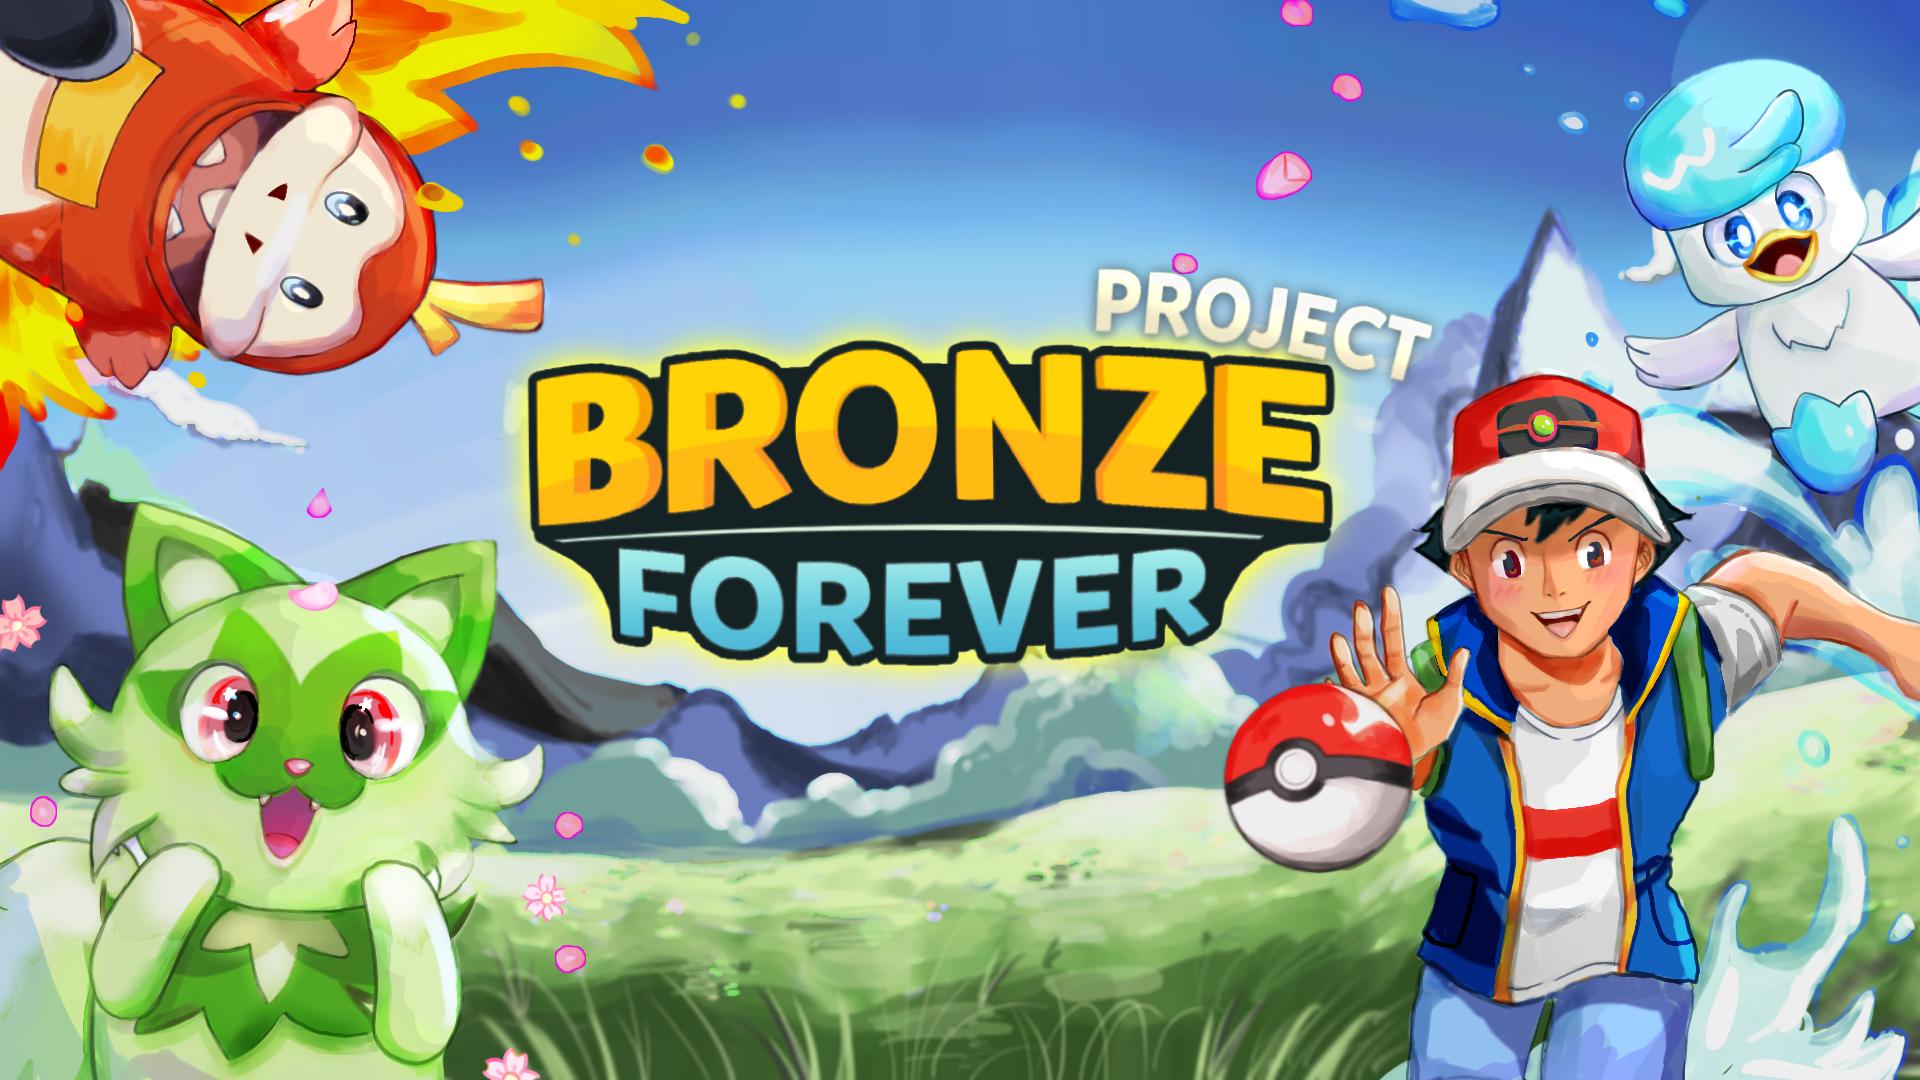 Pokemon Project Bronze Forever Discord Server for Pokemon, Roblox